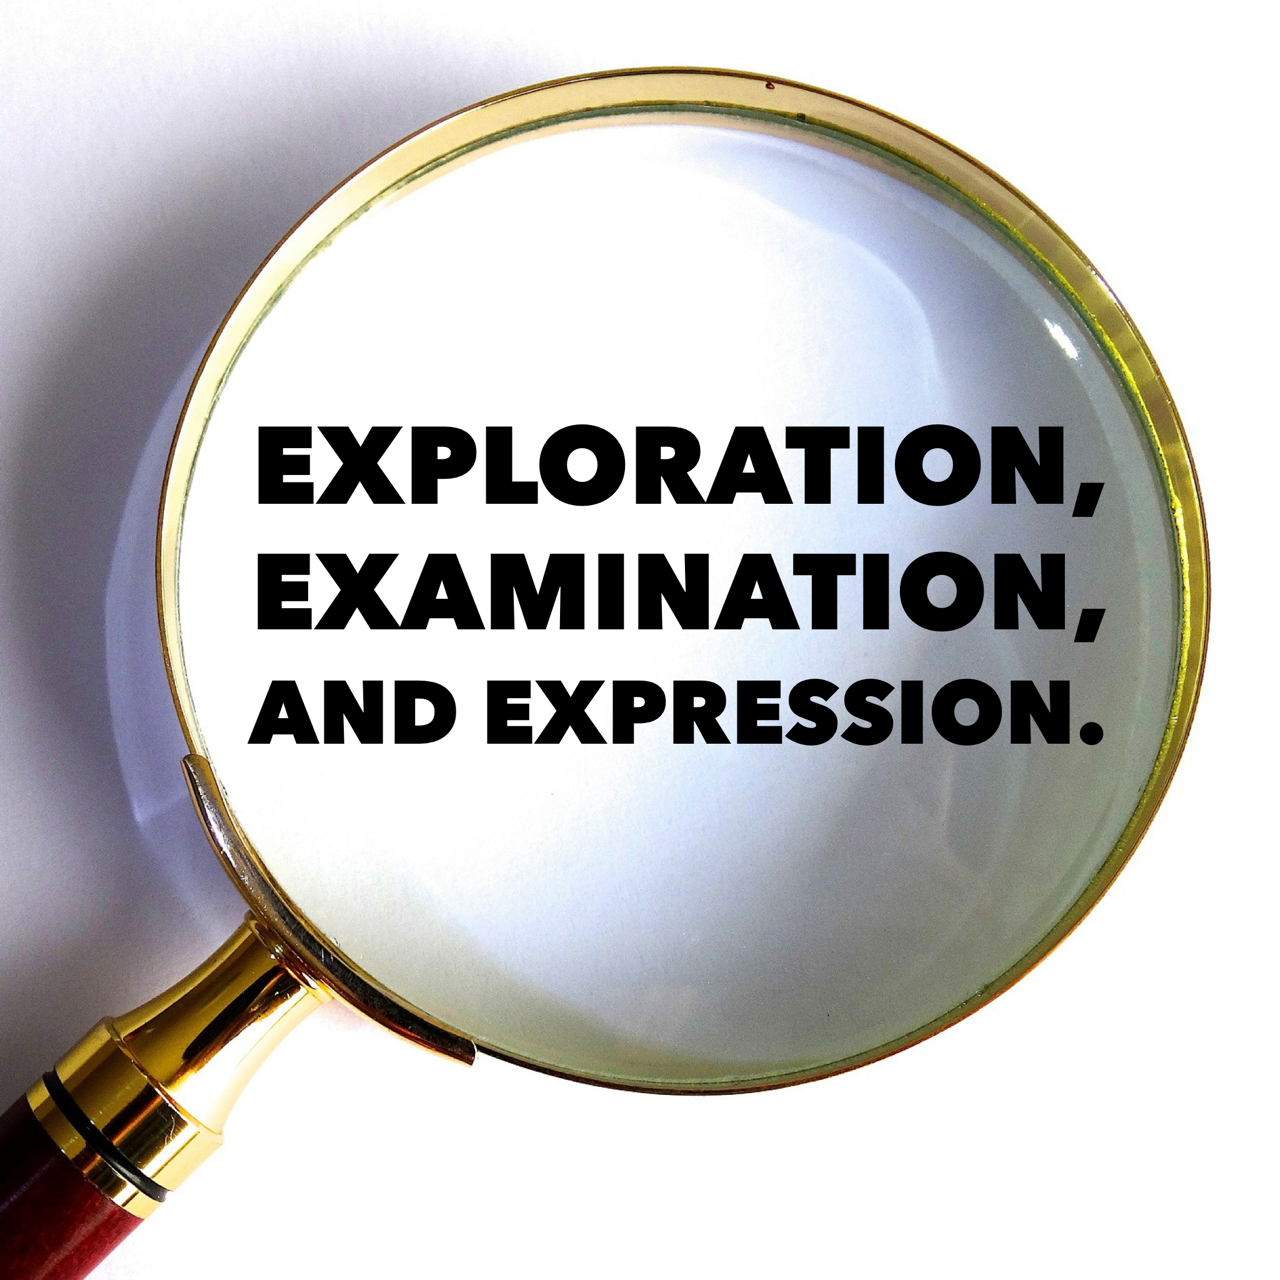 Exploration, examination and expression